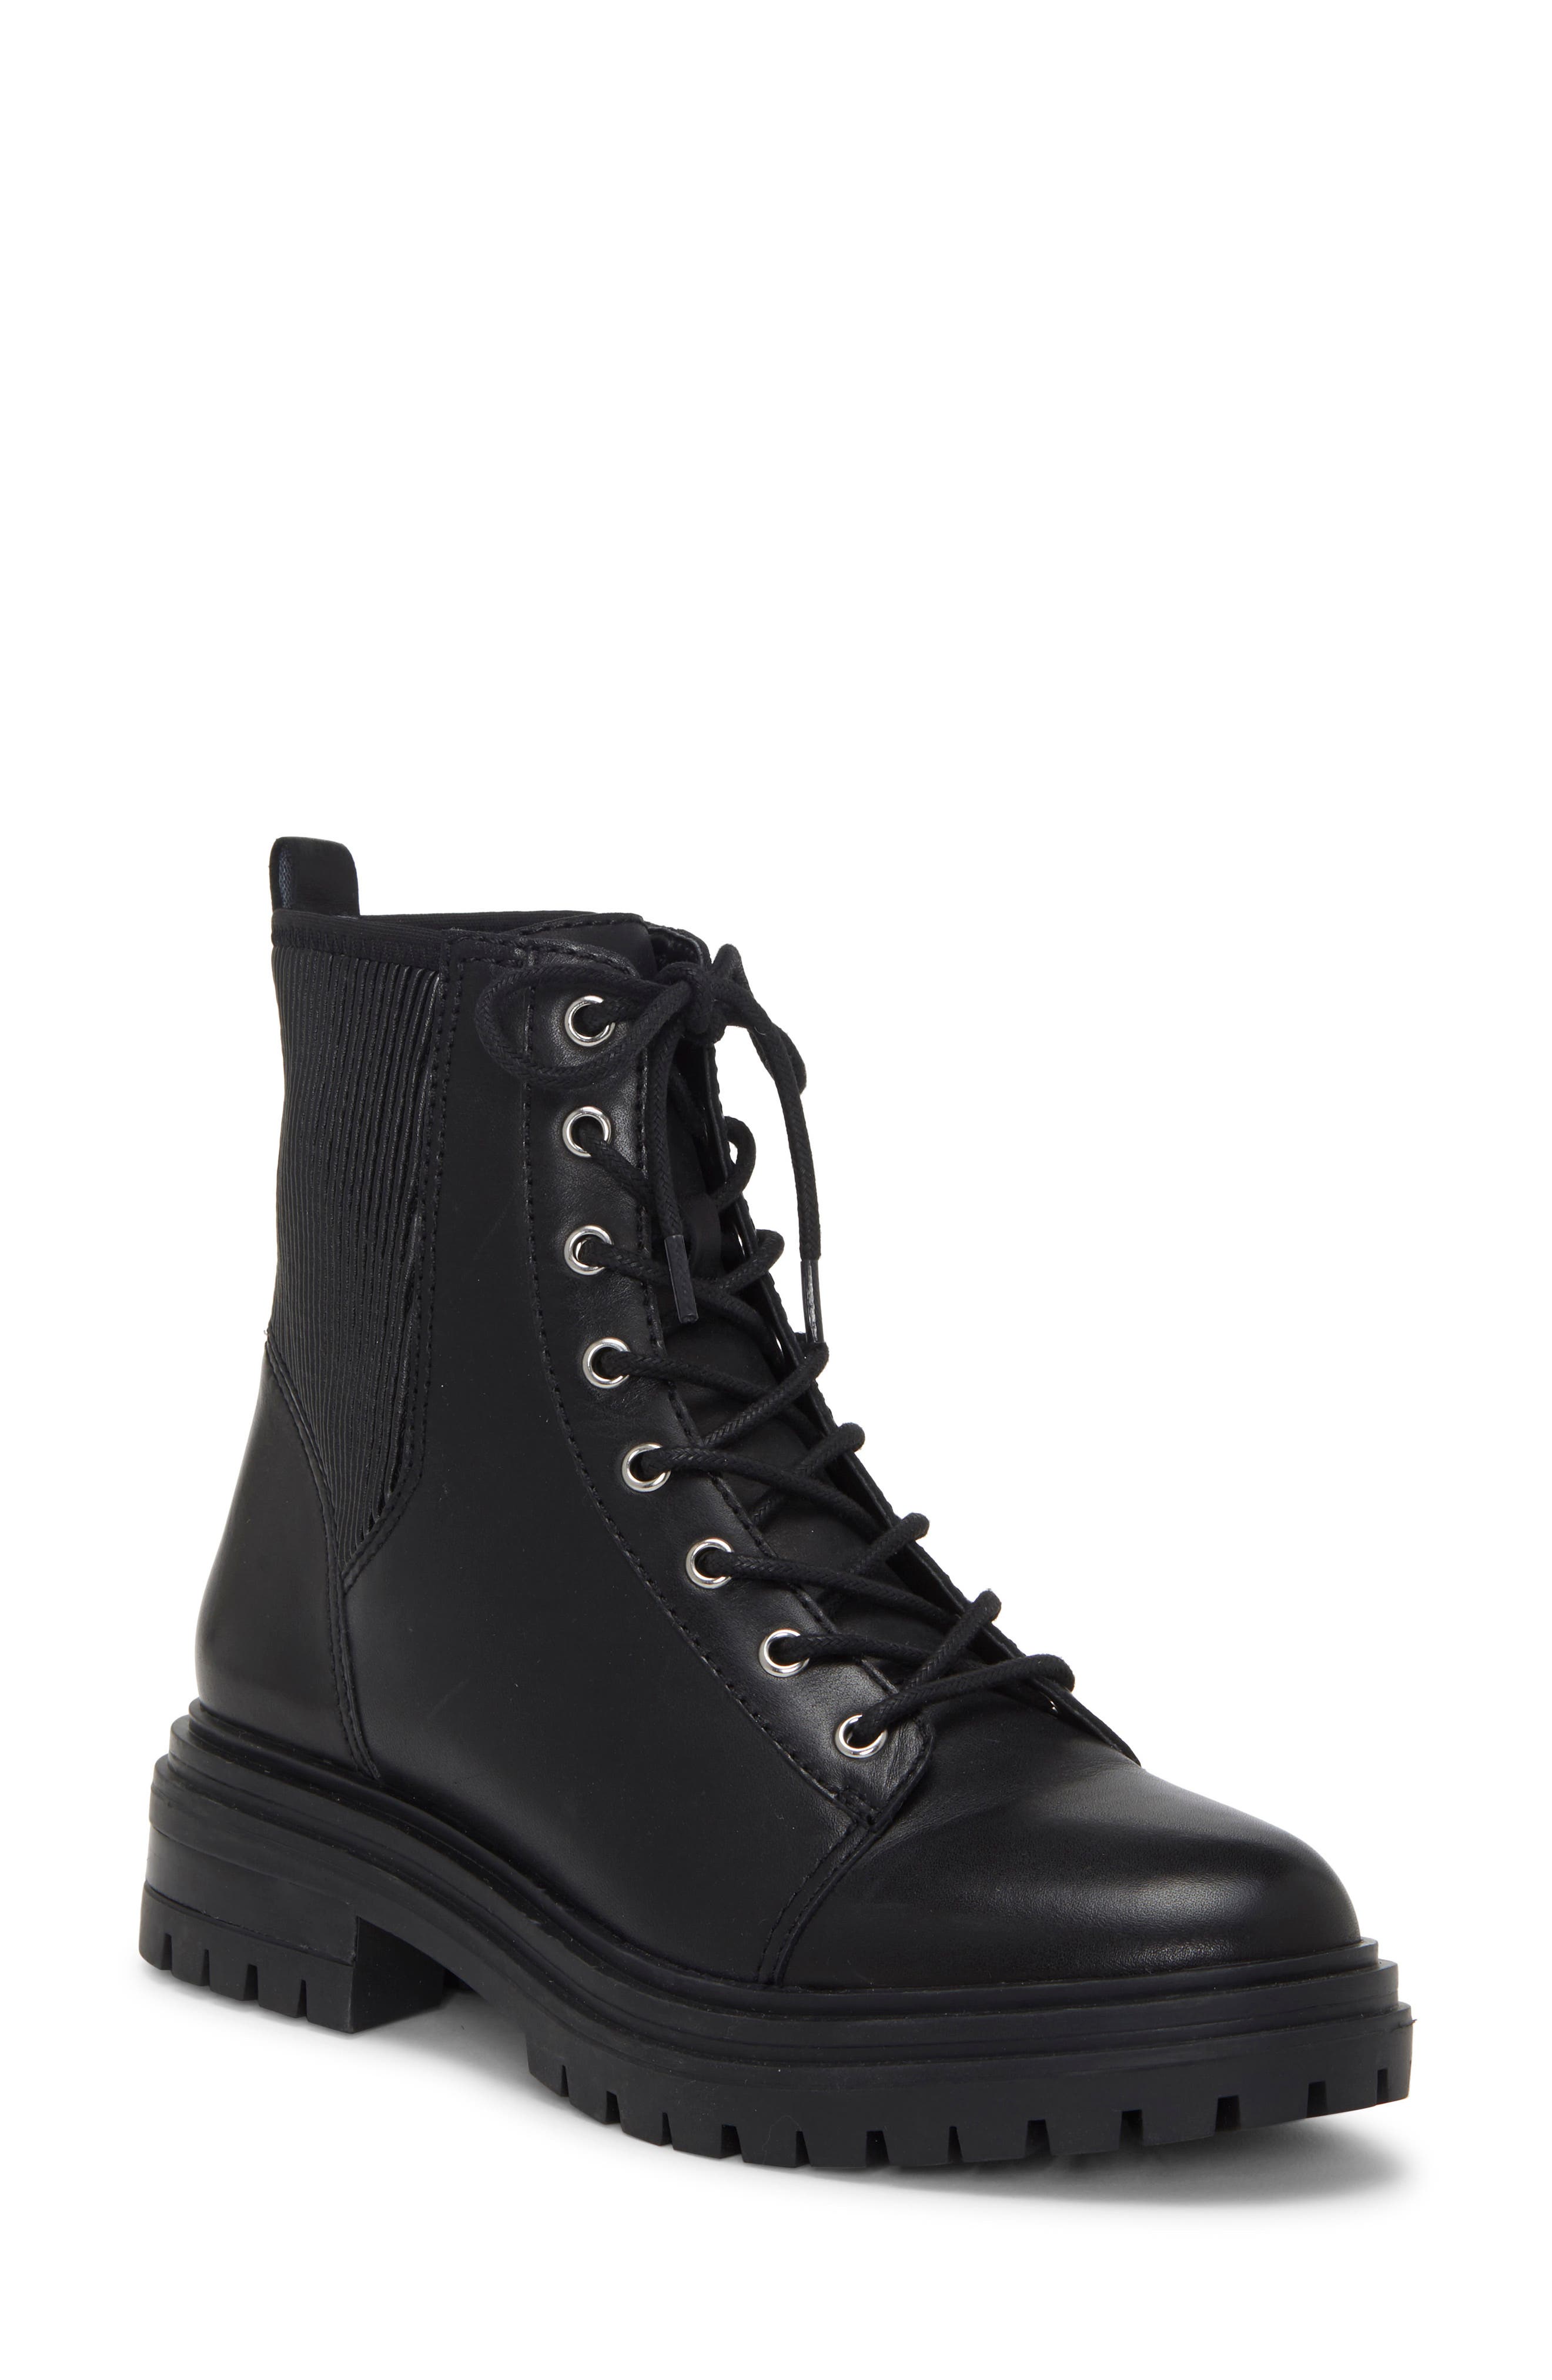 black combat boots women's cheap